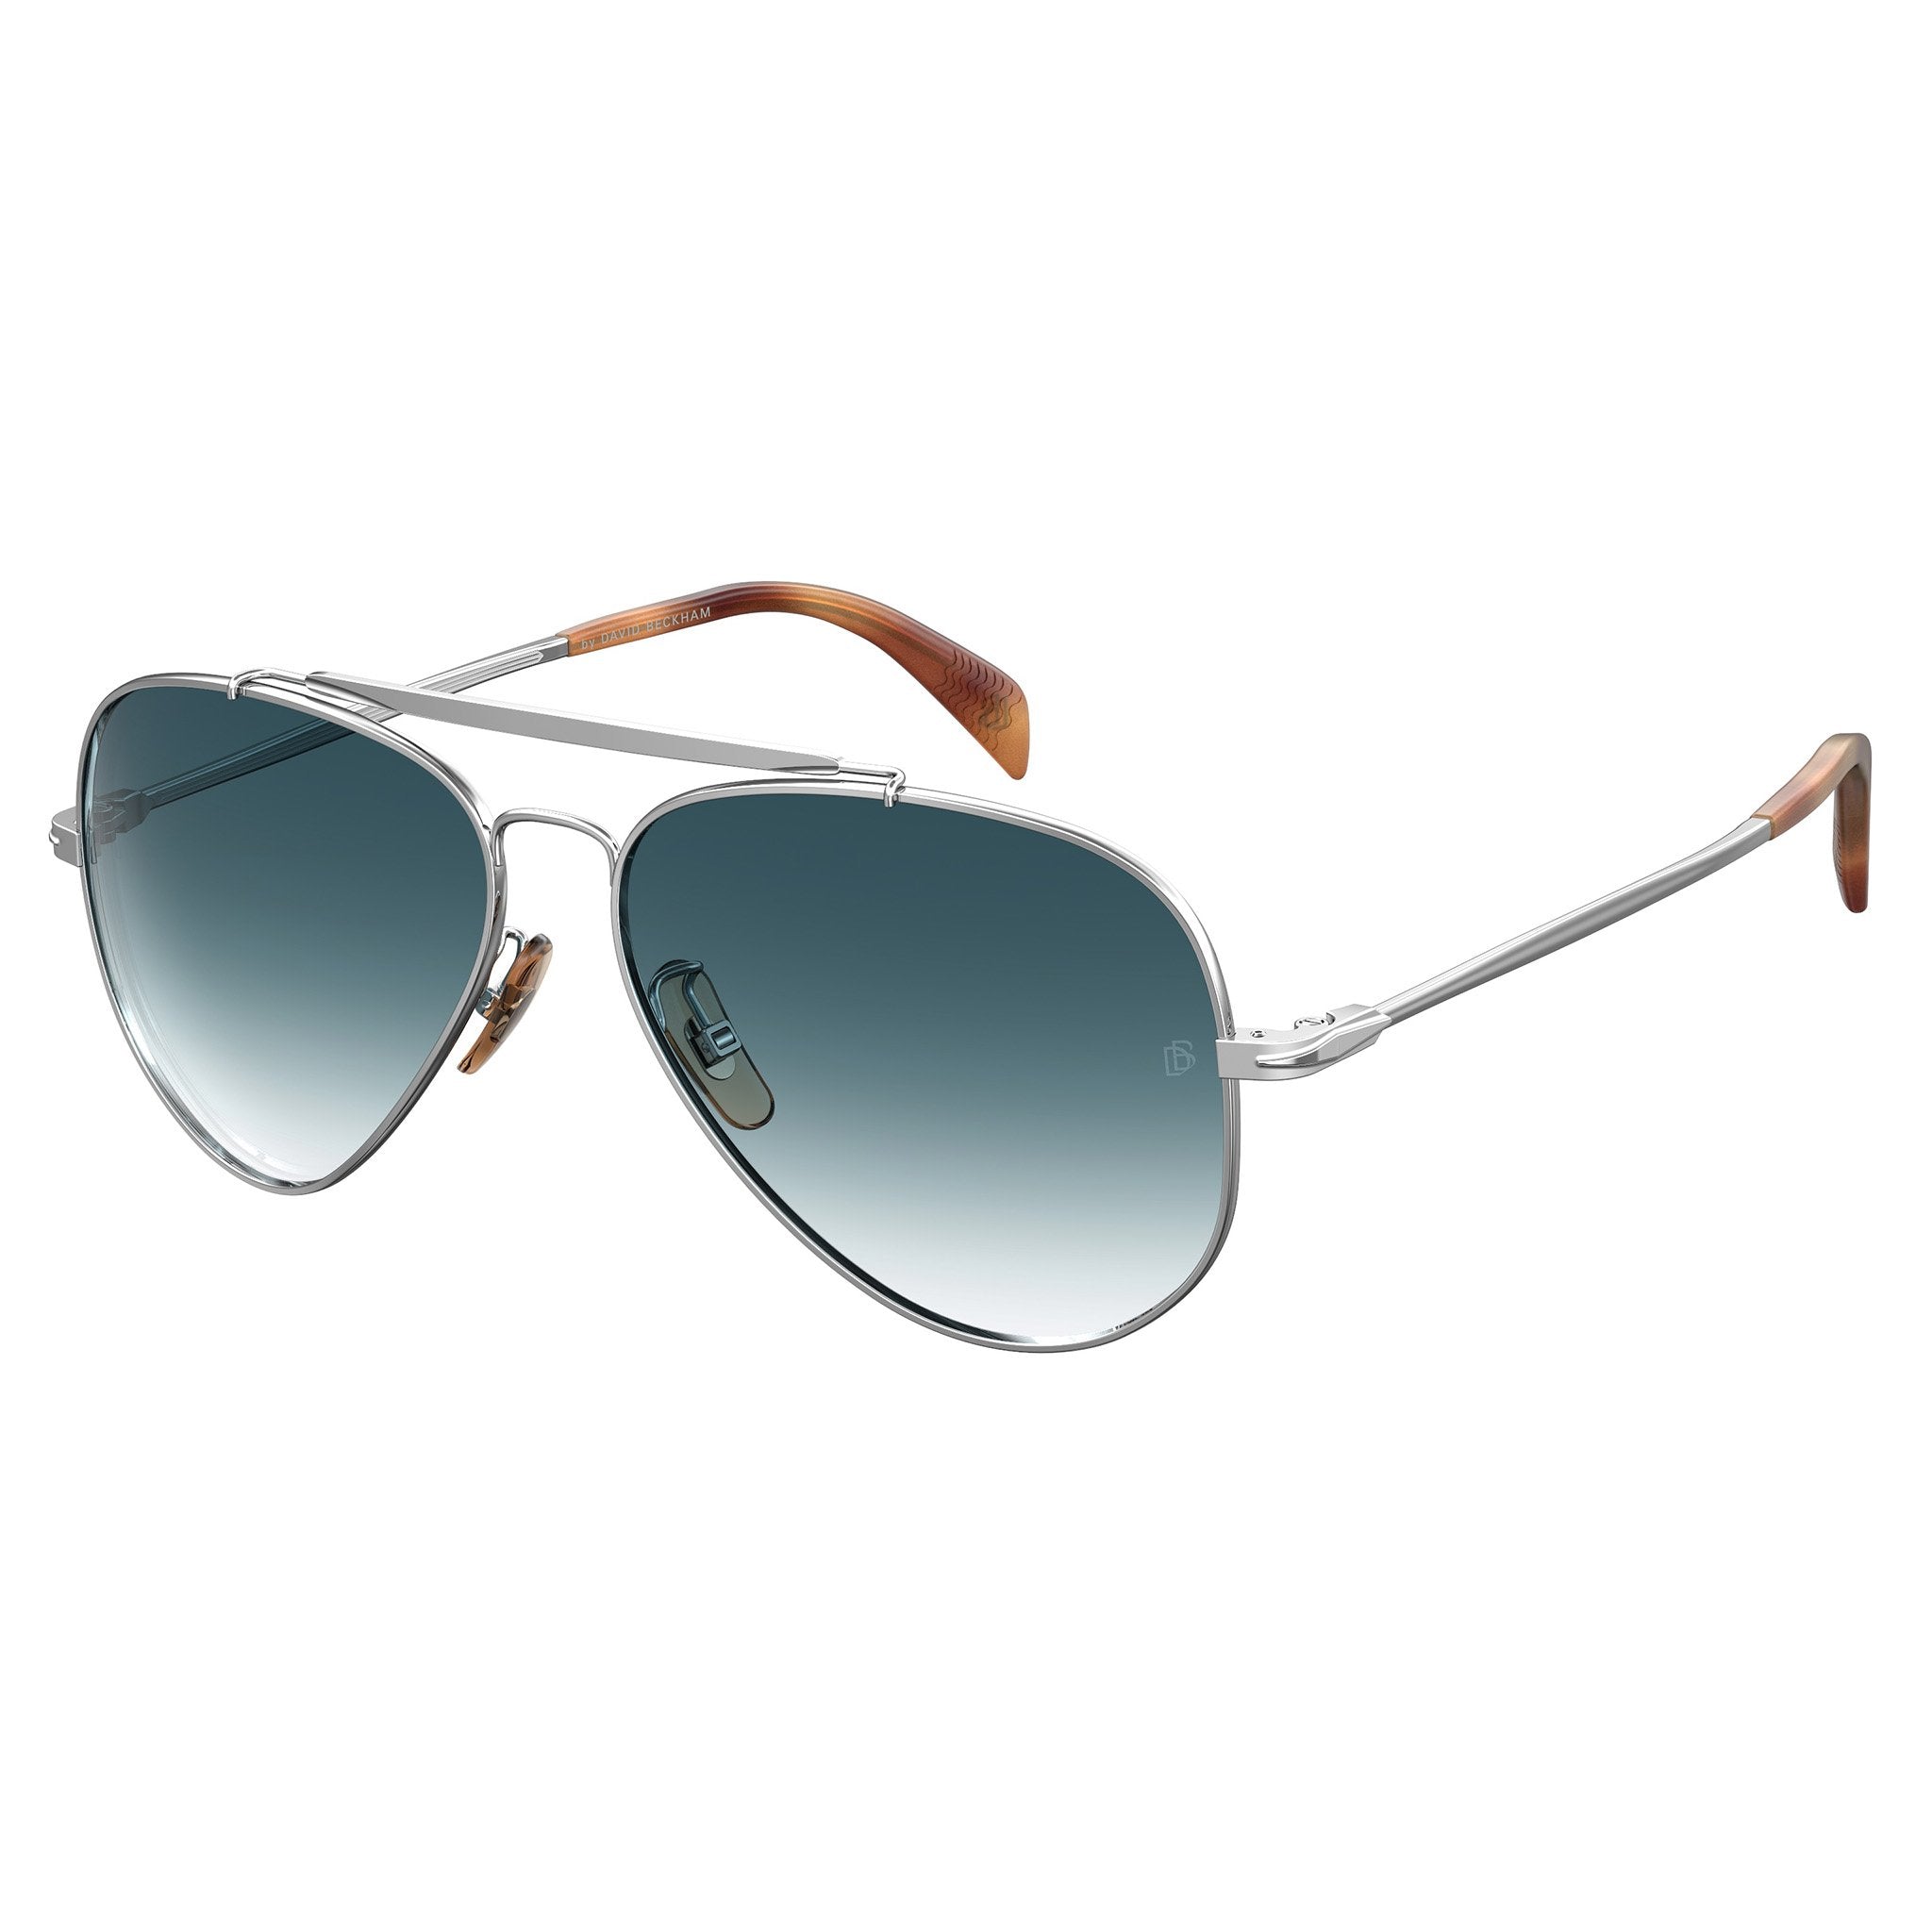 Sunglasses store – Ace Polarised Sunglasses